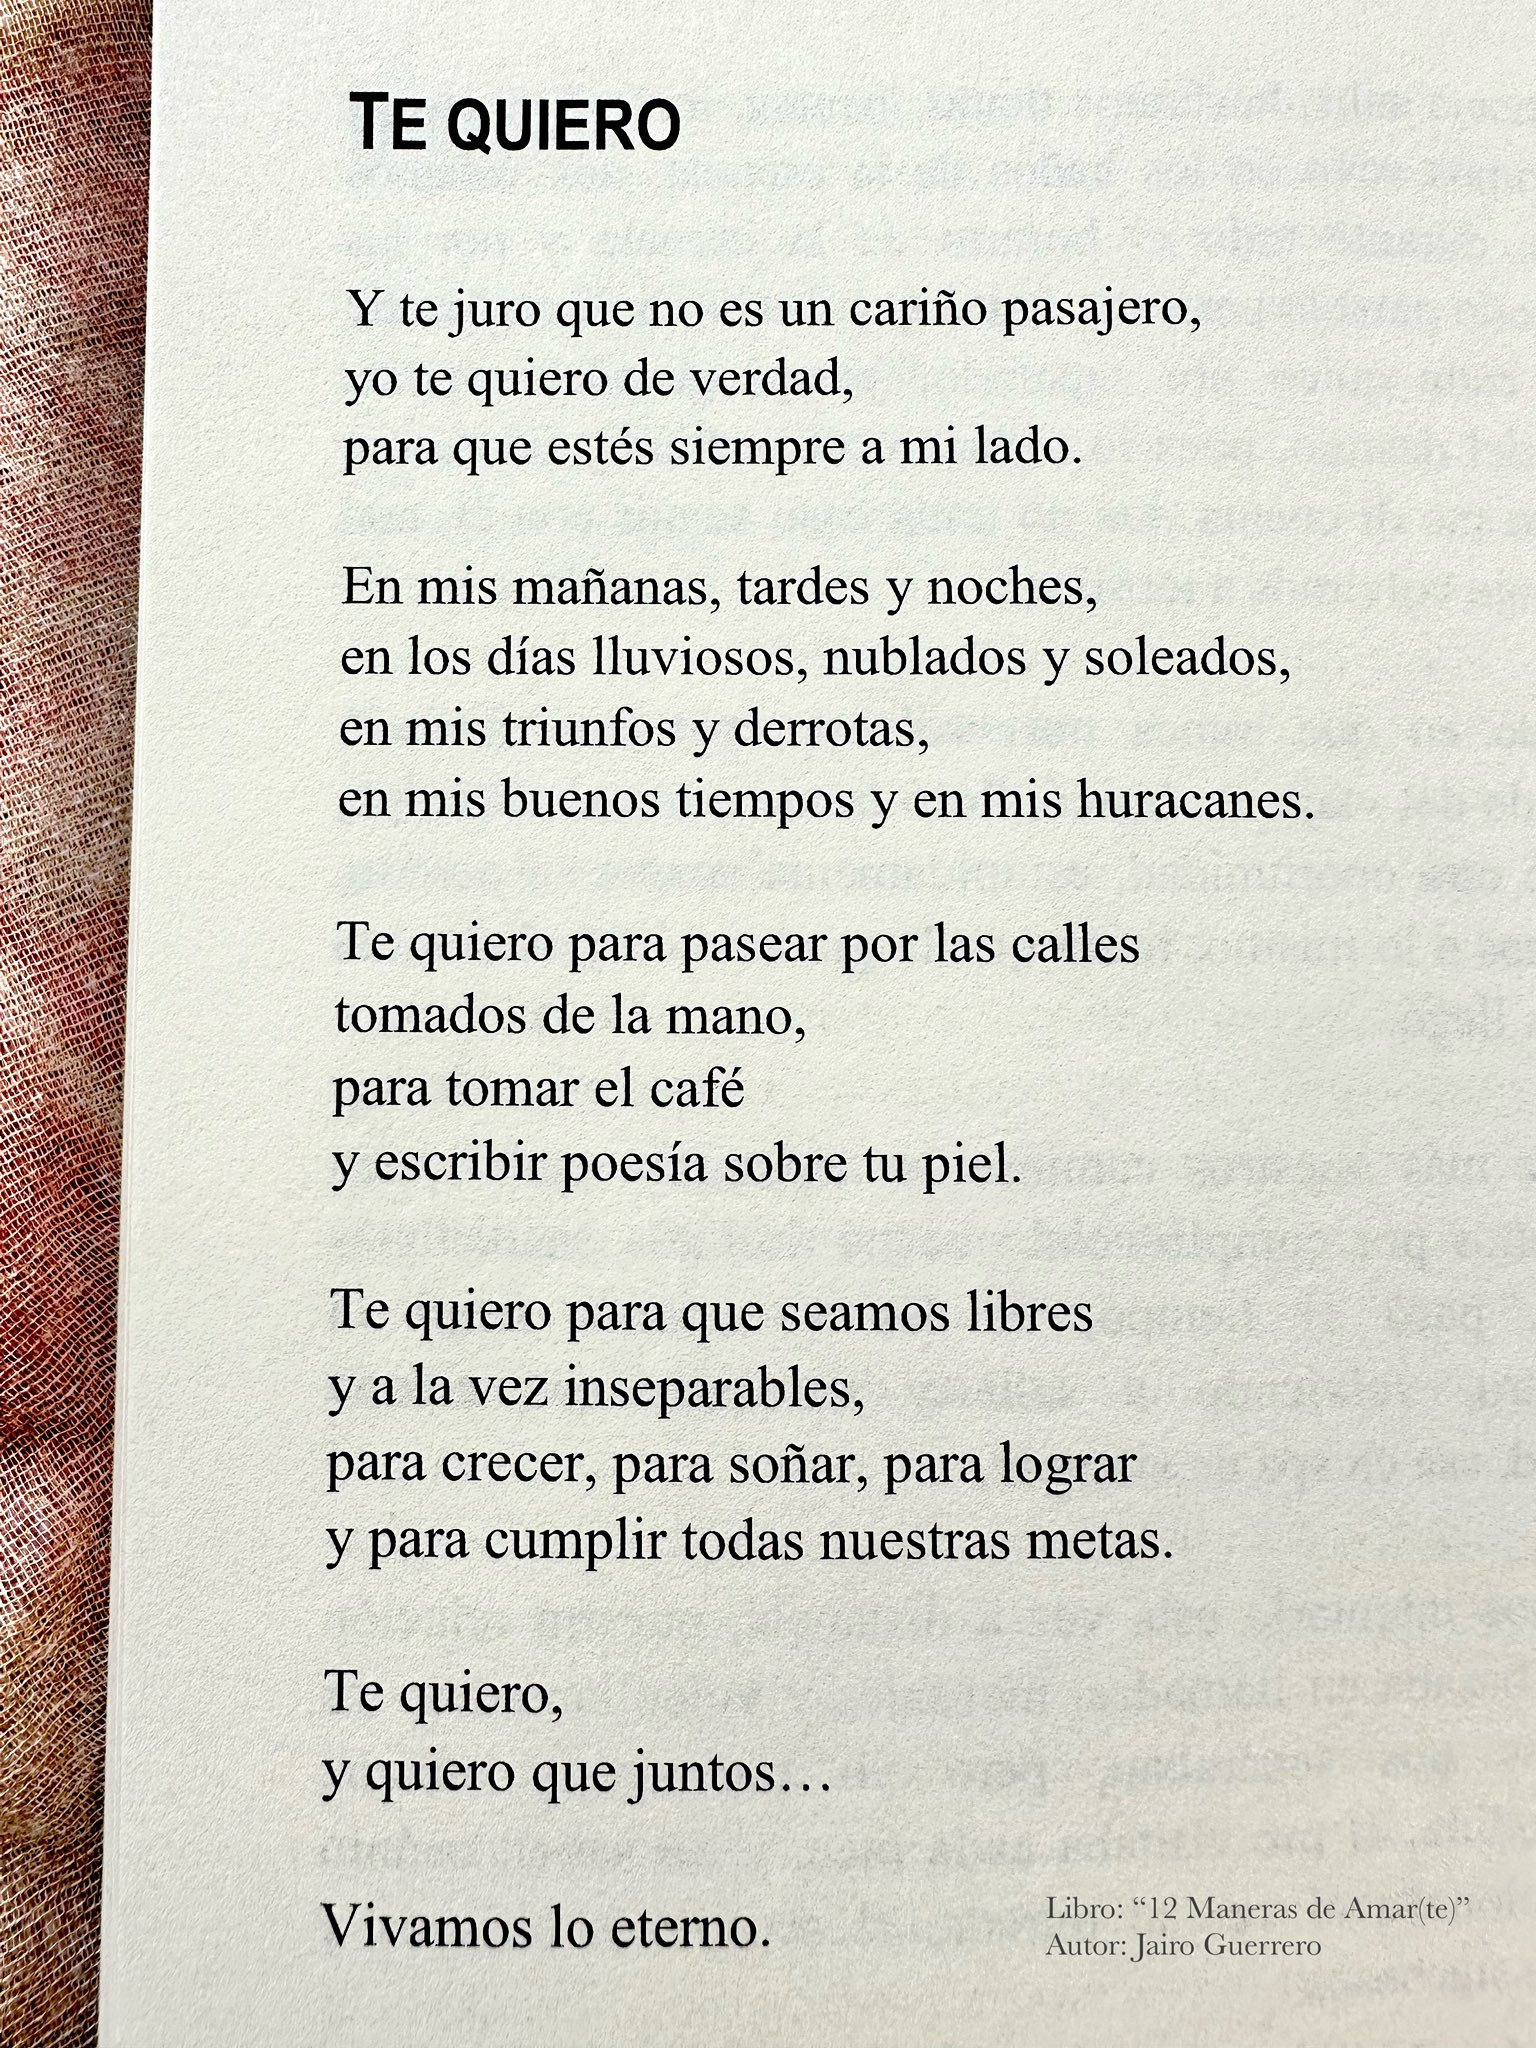 Jairo Guerrero on X: Libro: “12 Maneras de Amar(te)” 📙   / X